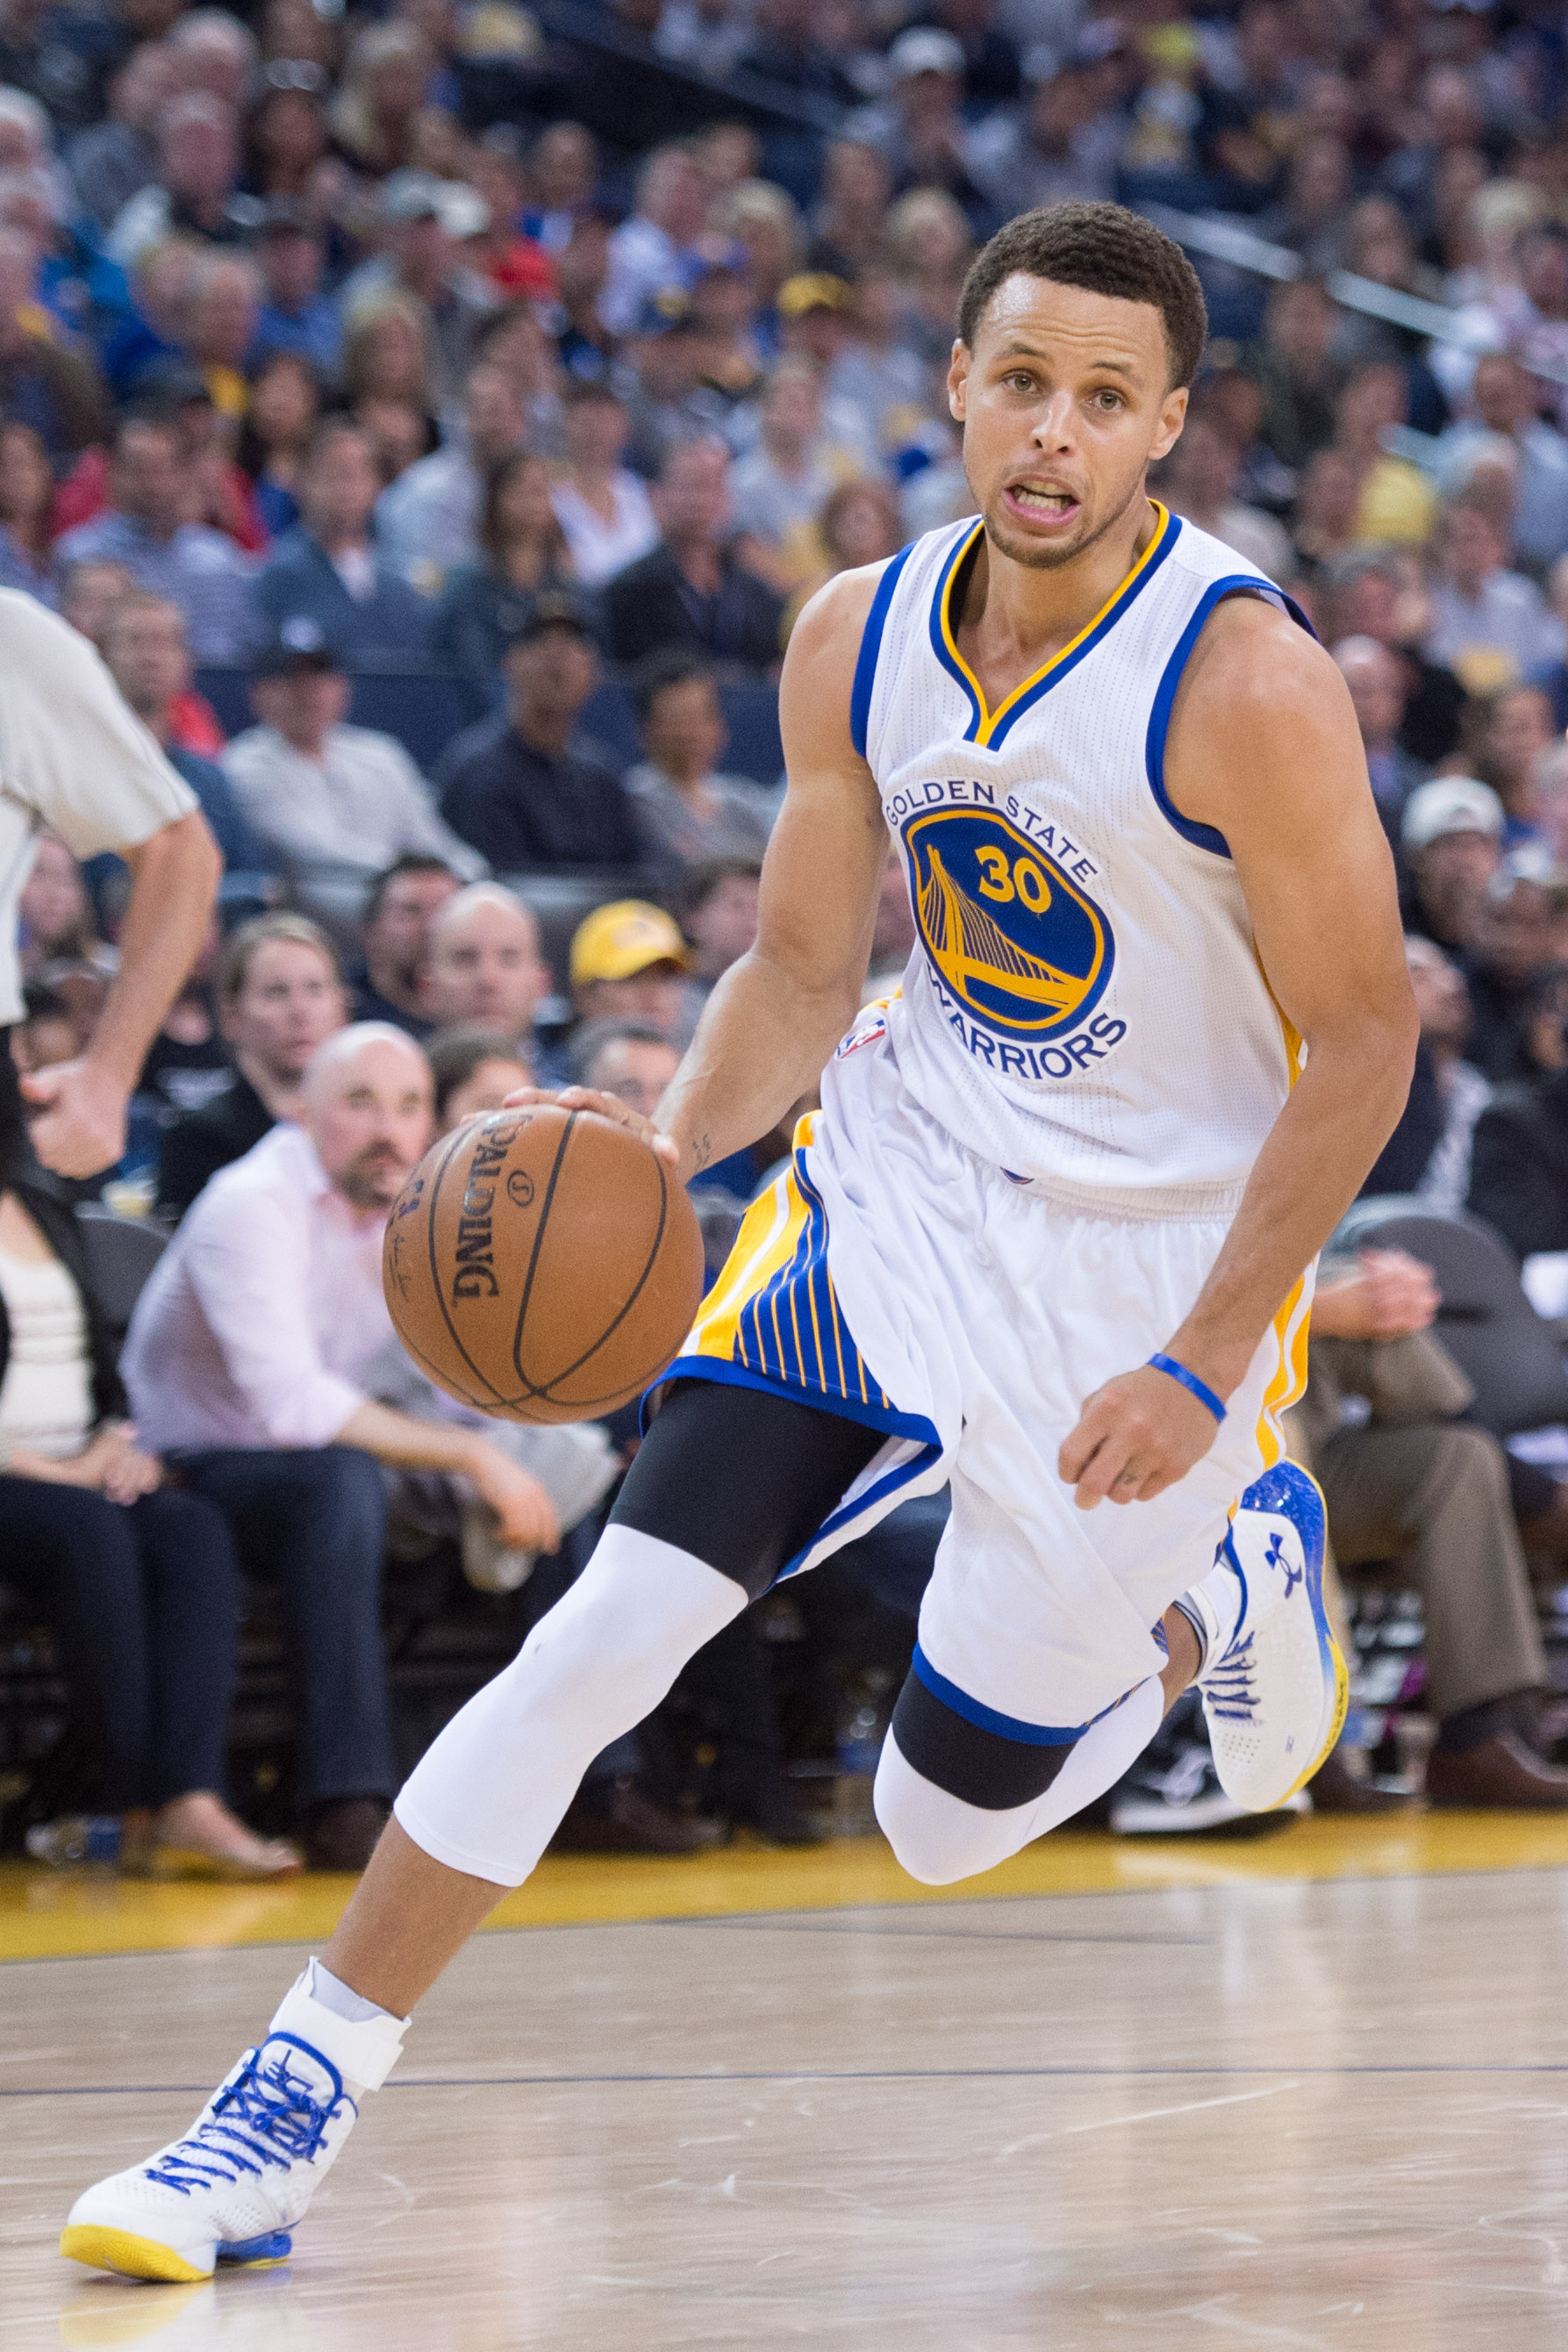 Stephen Curry named NBA MVP for 2nd straight season